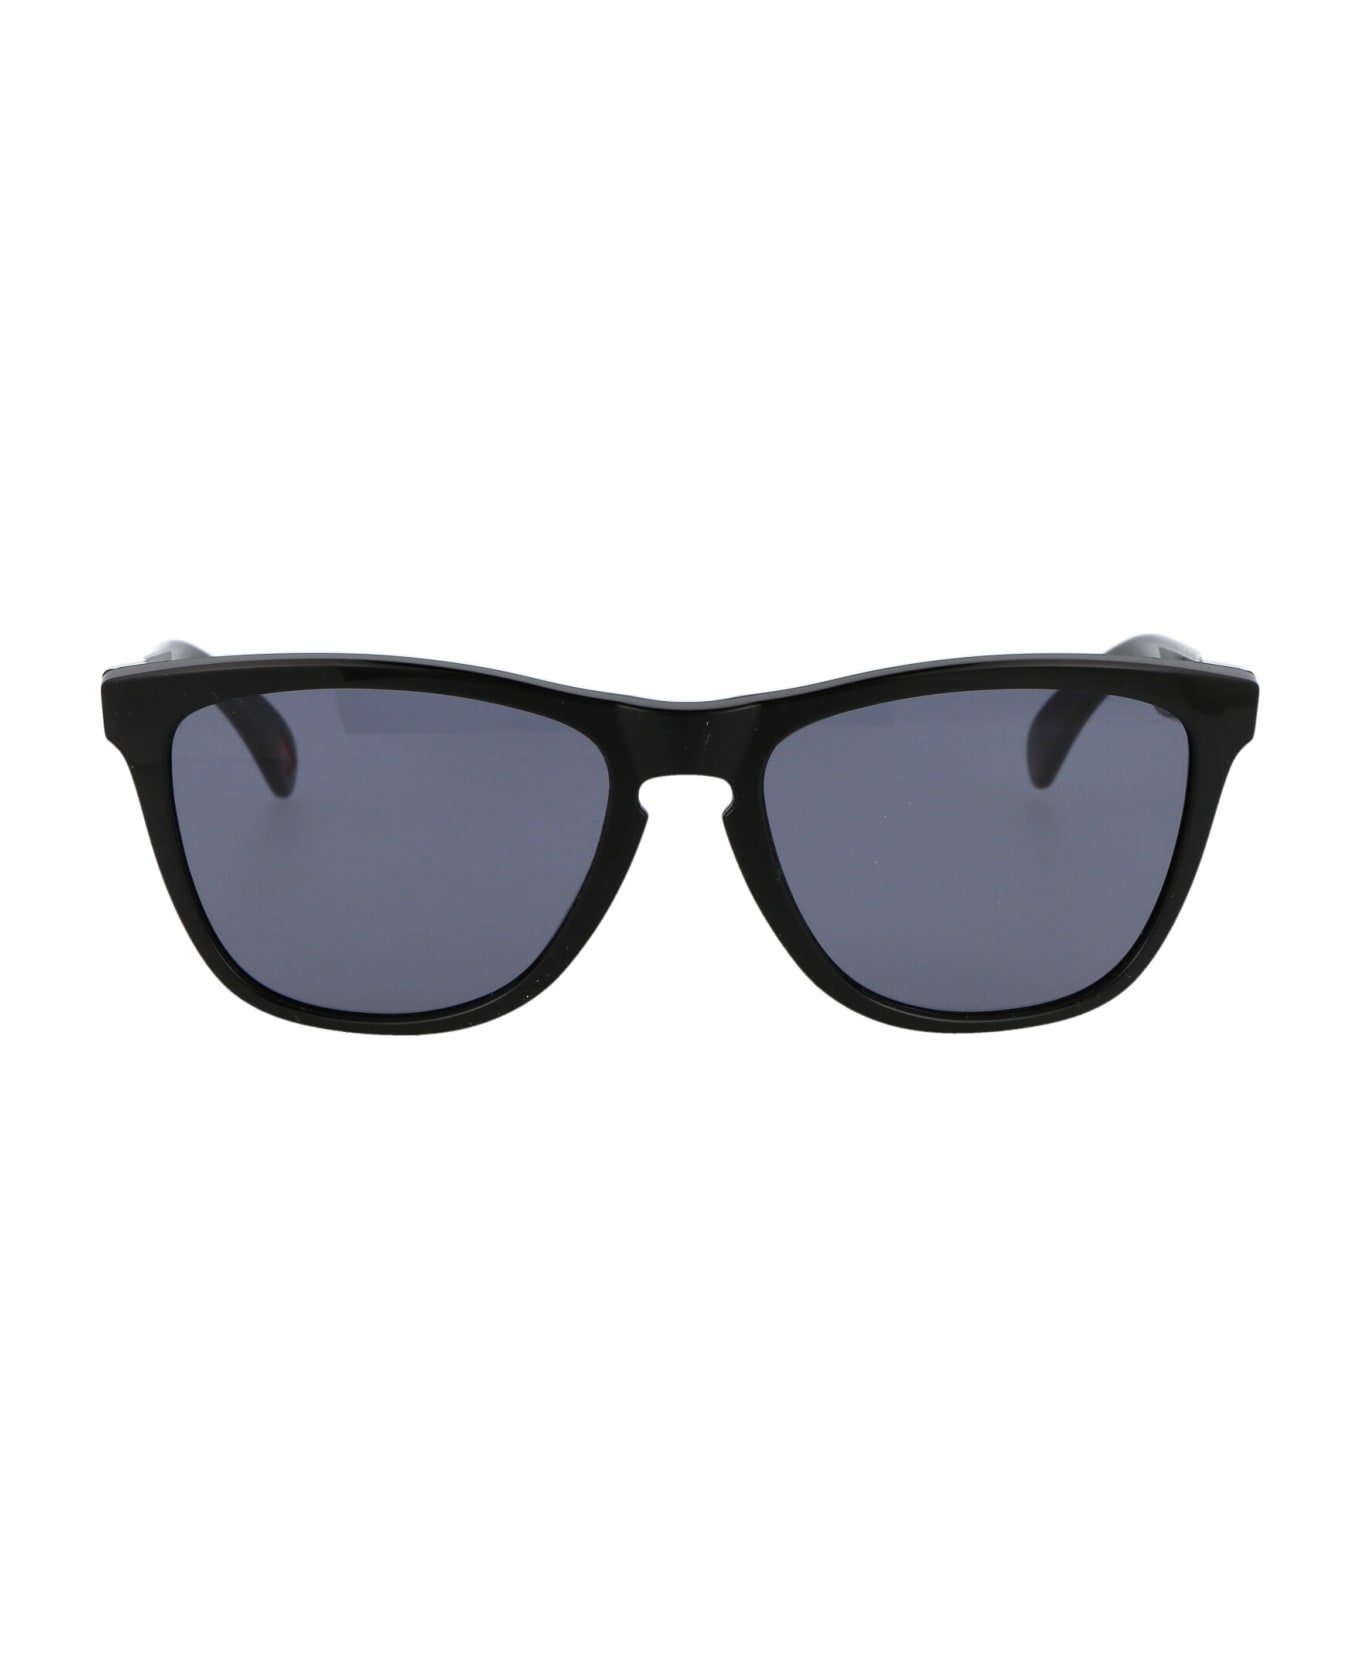 Oakley Frogskins Sunglasses サングラス